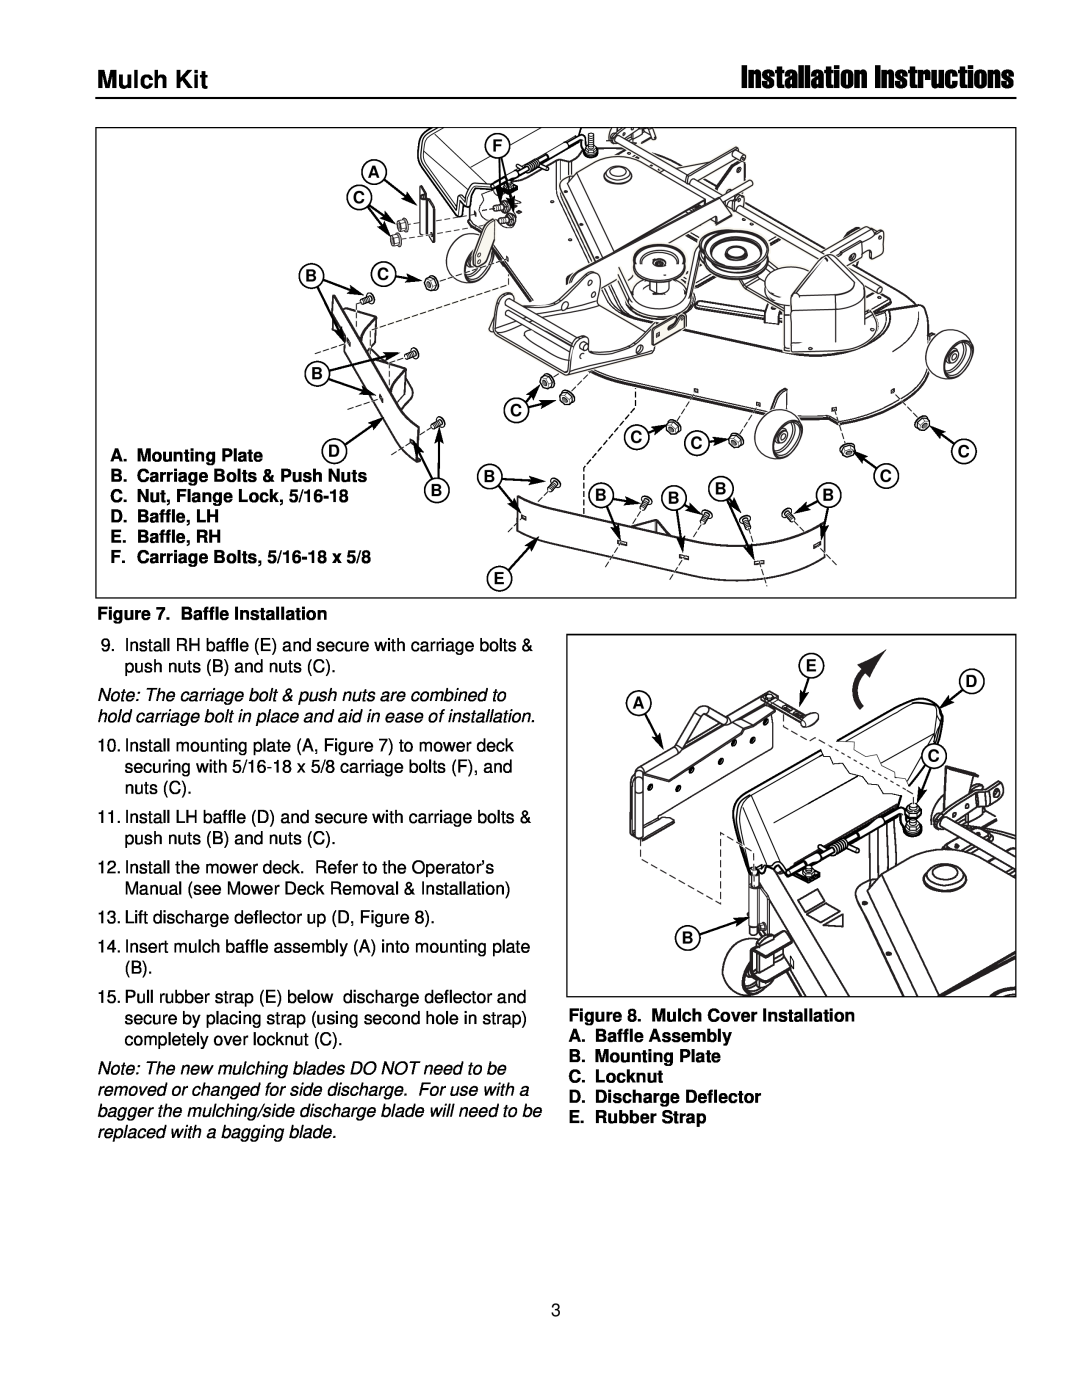 Simplicity 250Z installation instructions Mulch Kit, Installation Instructions 